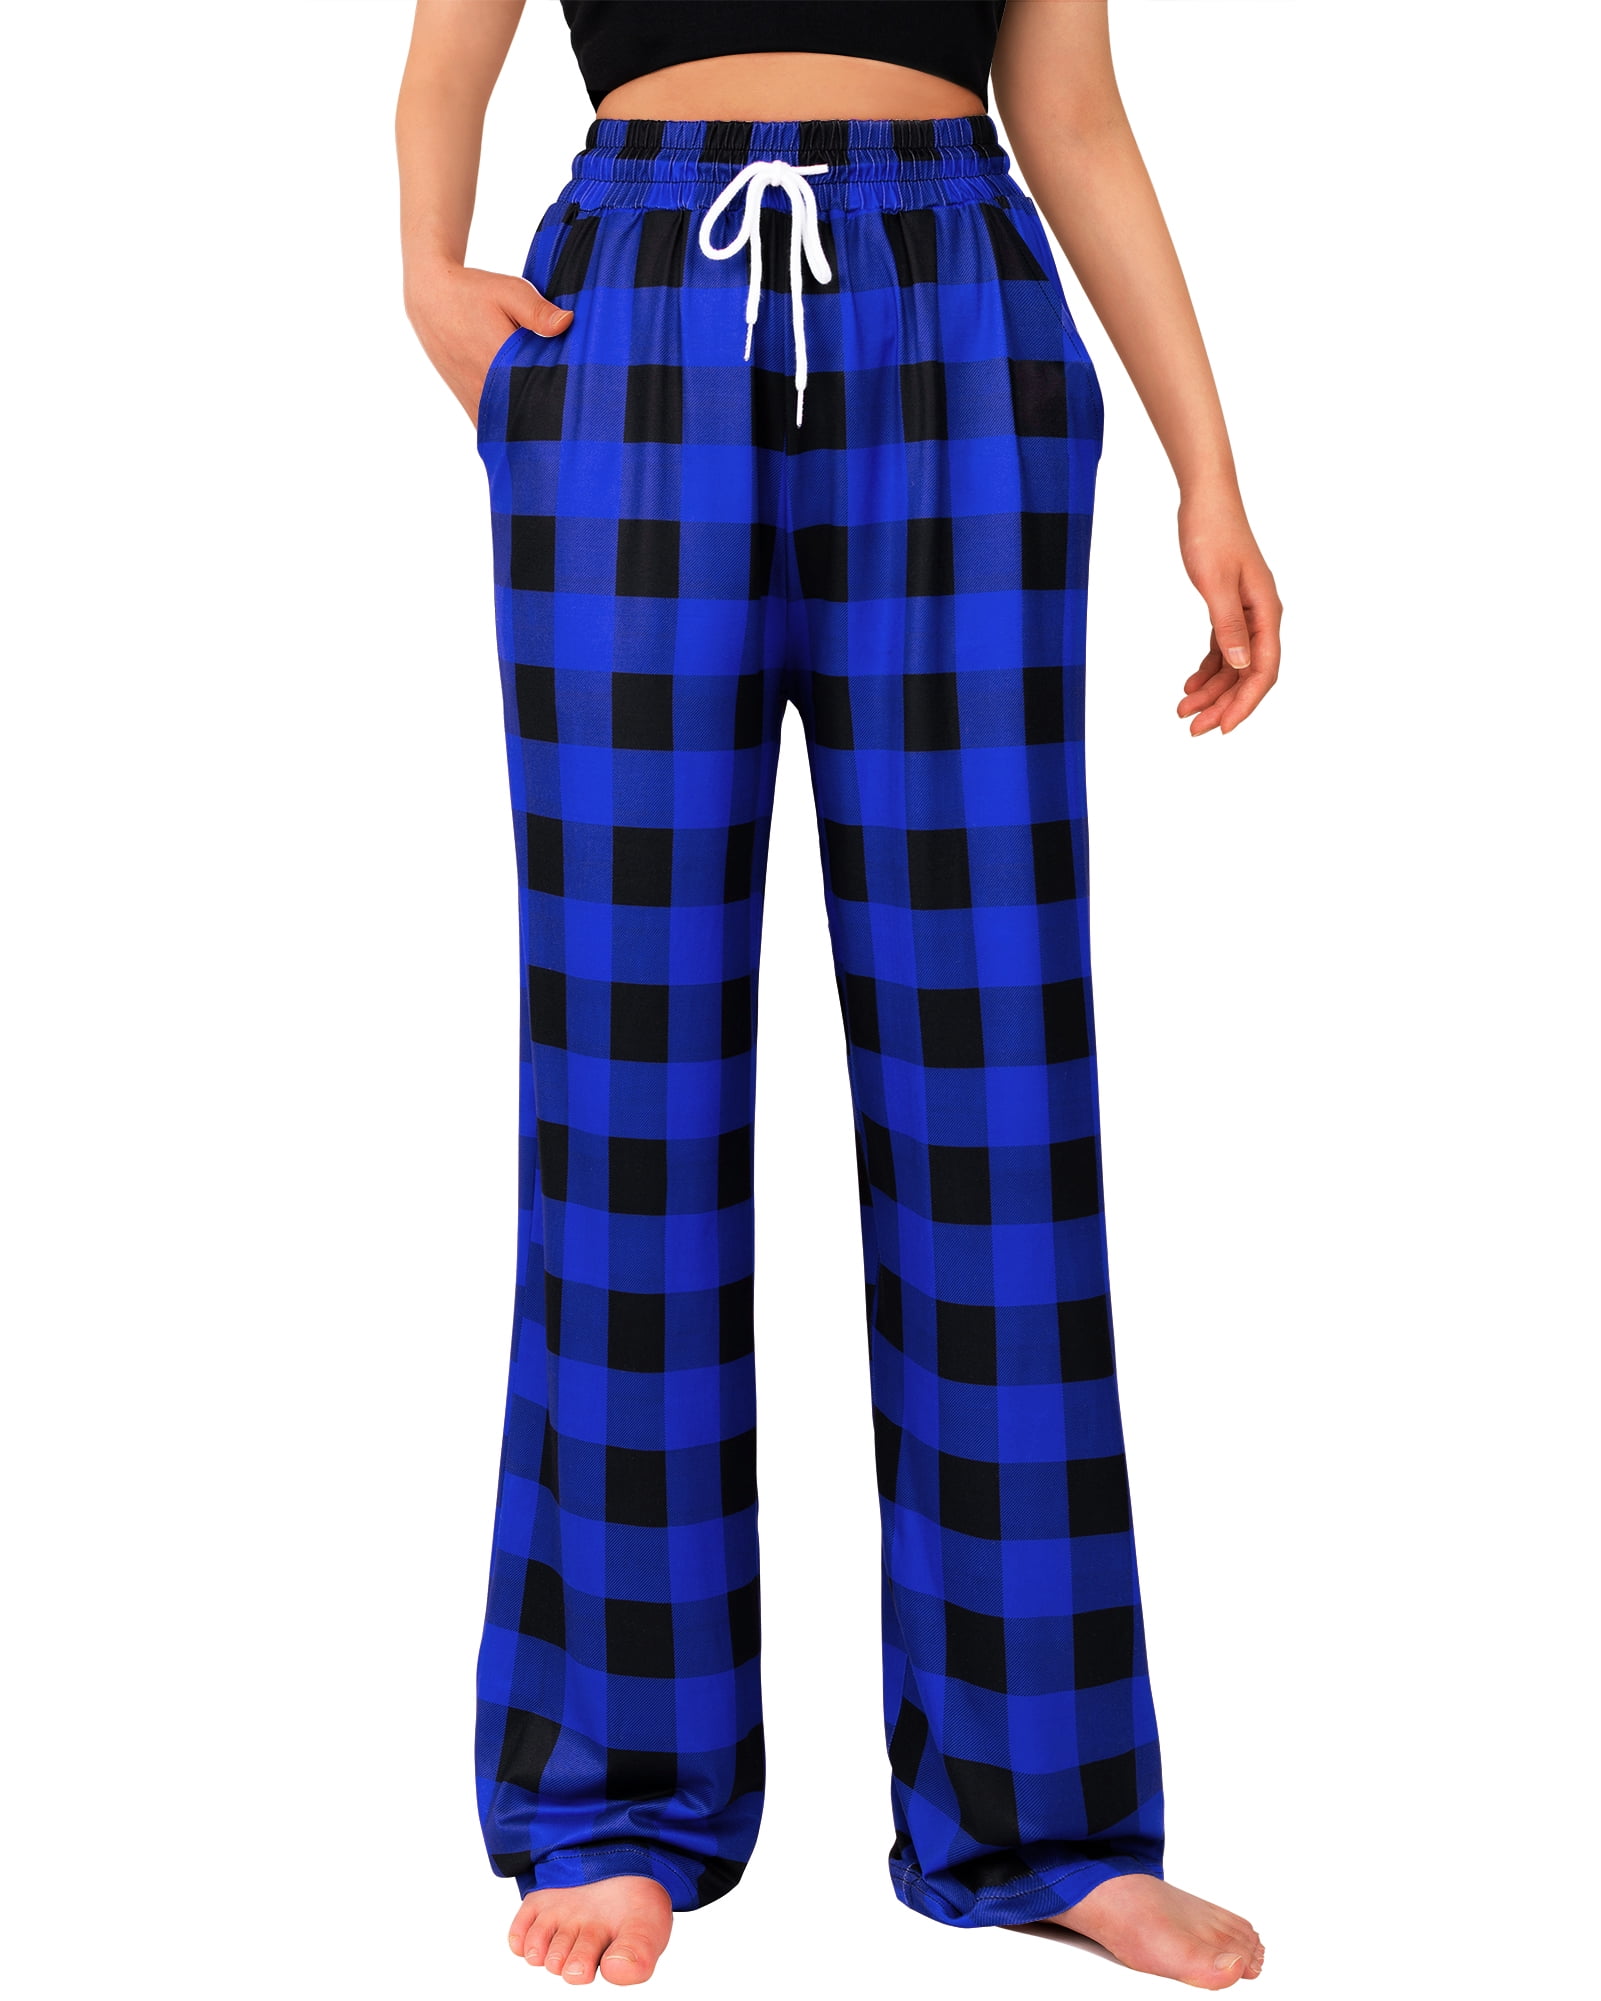 Siliteelon Stretch Cotton Pajama Pants for Women Lightweight Yoga Pants ...